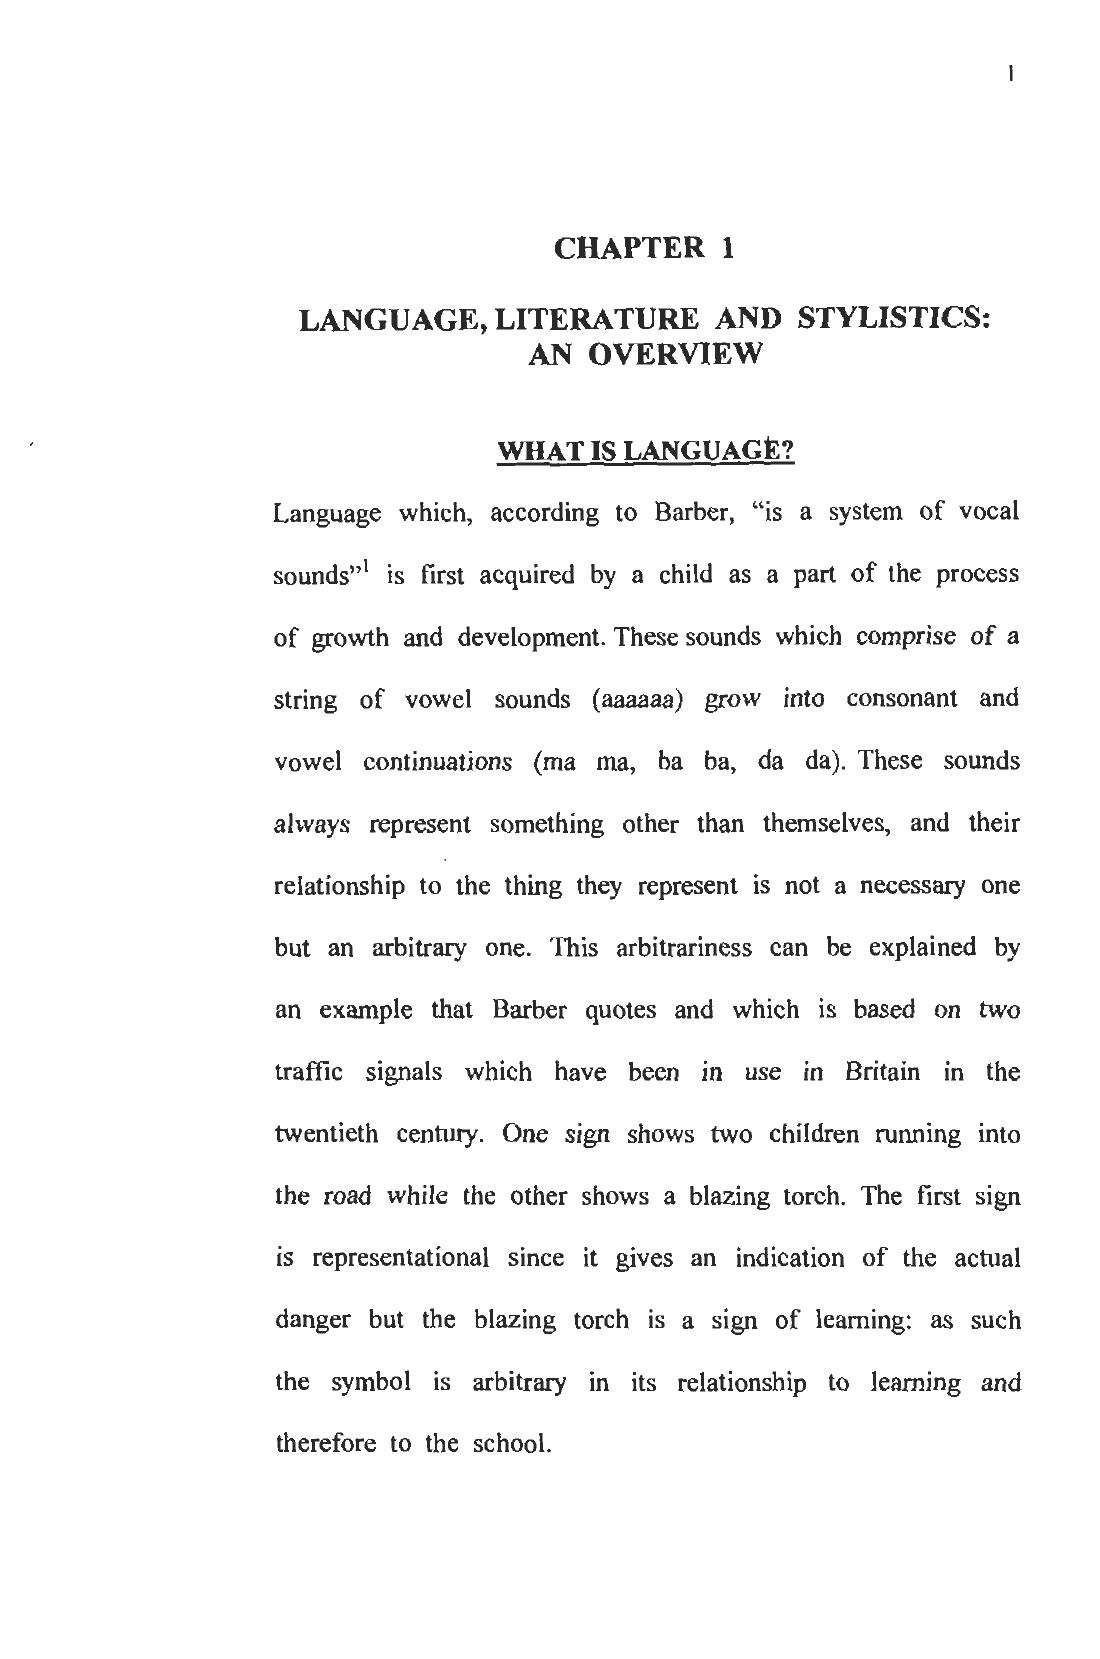 language, literature and stylistics